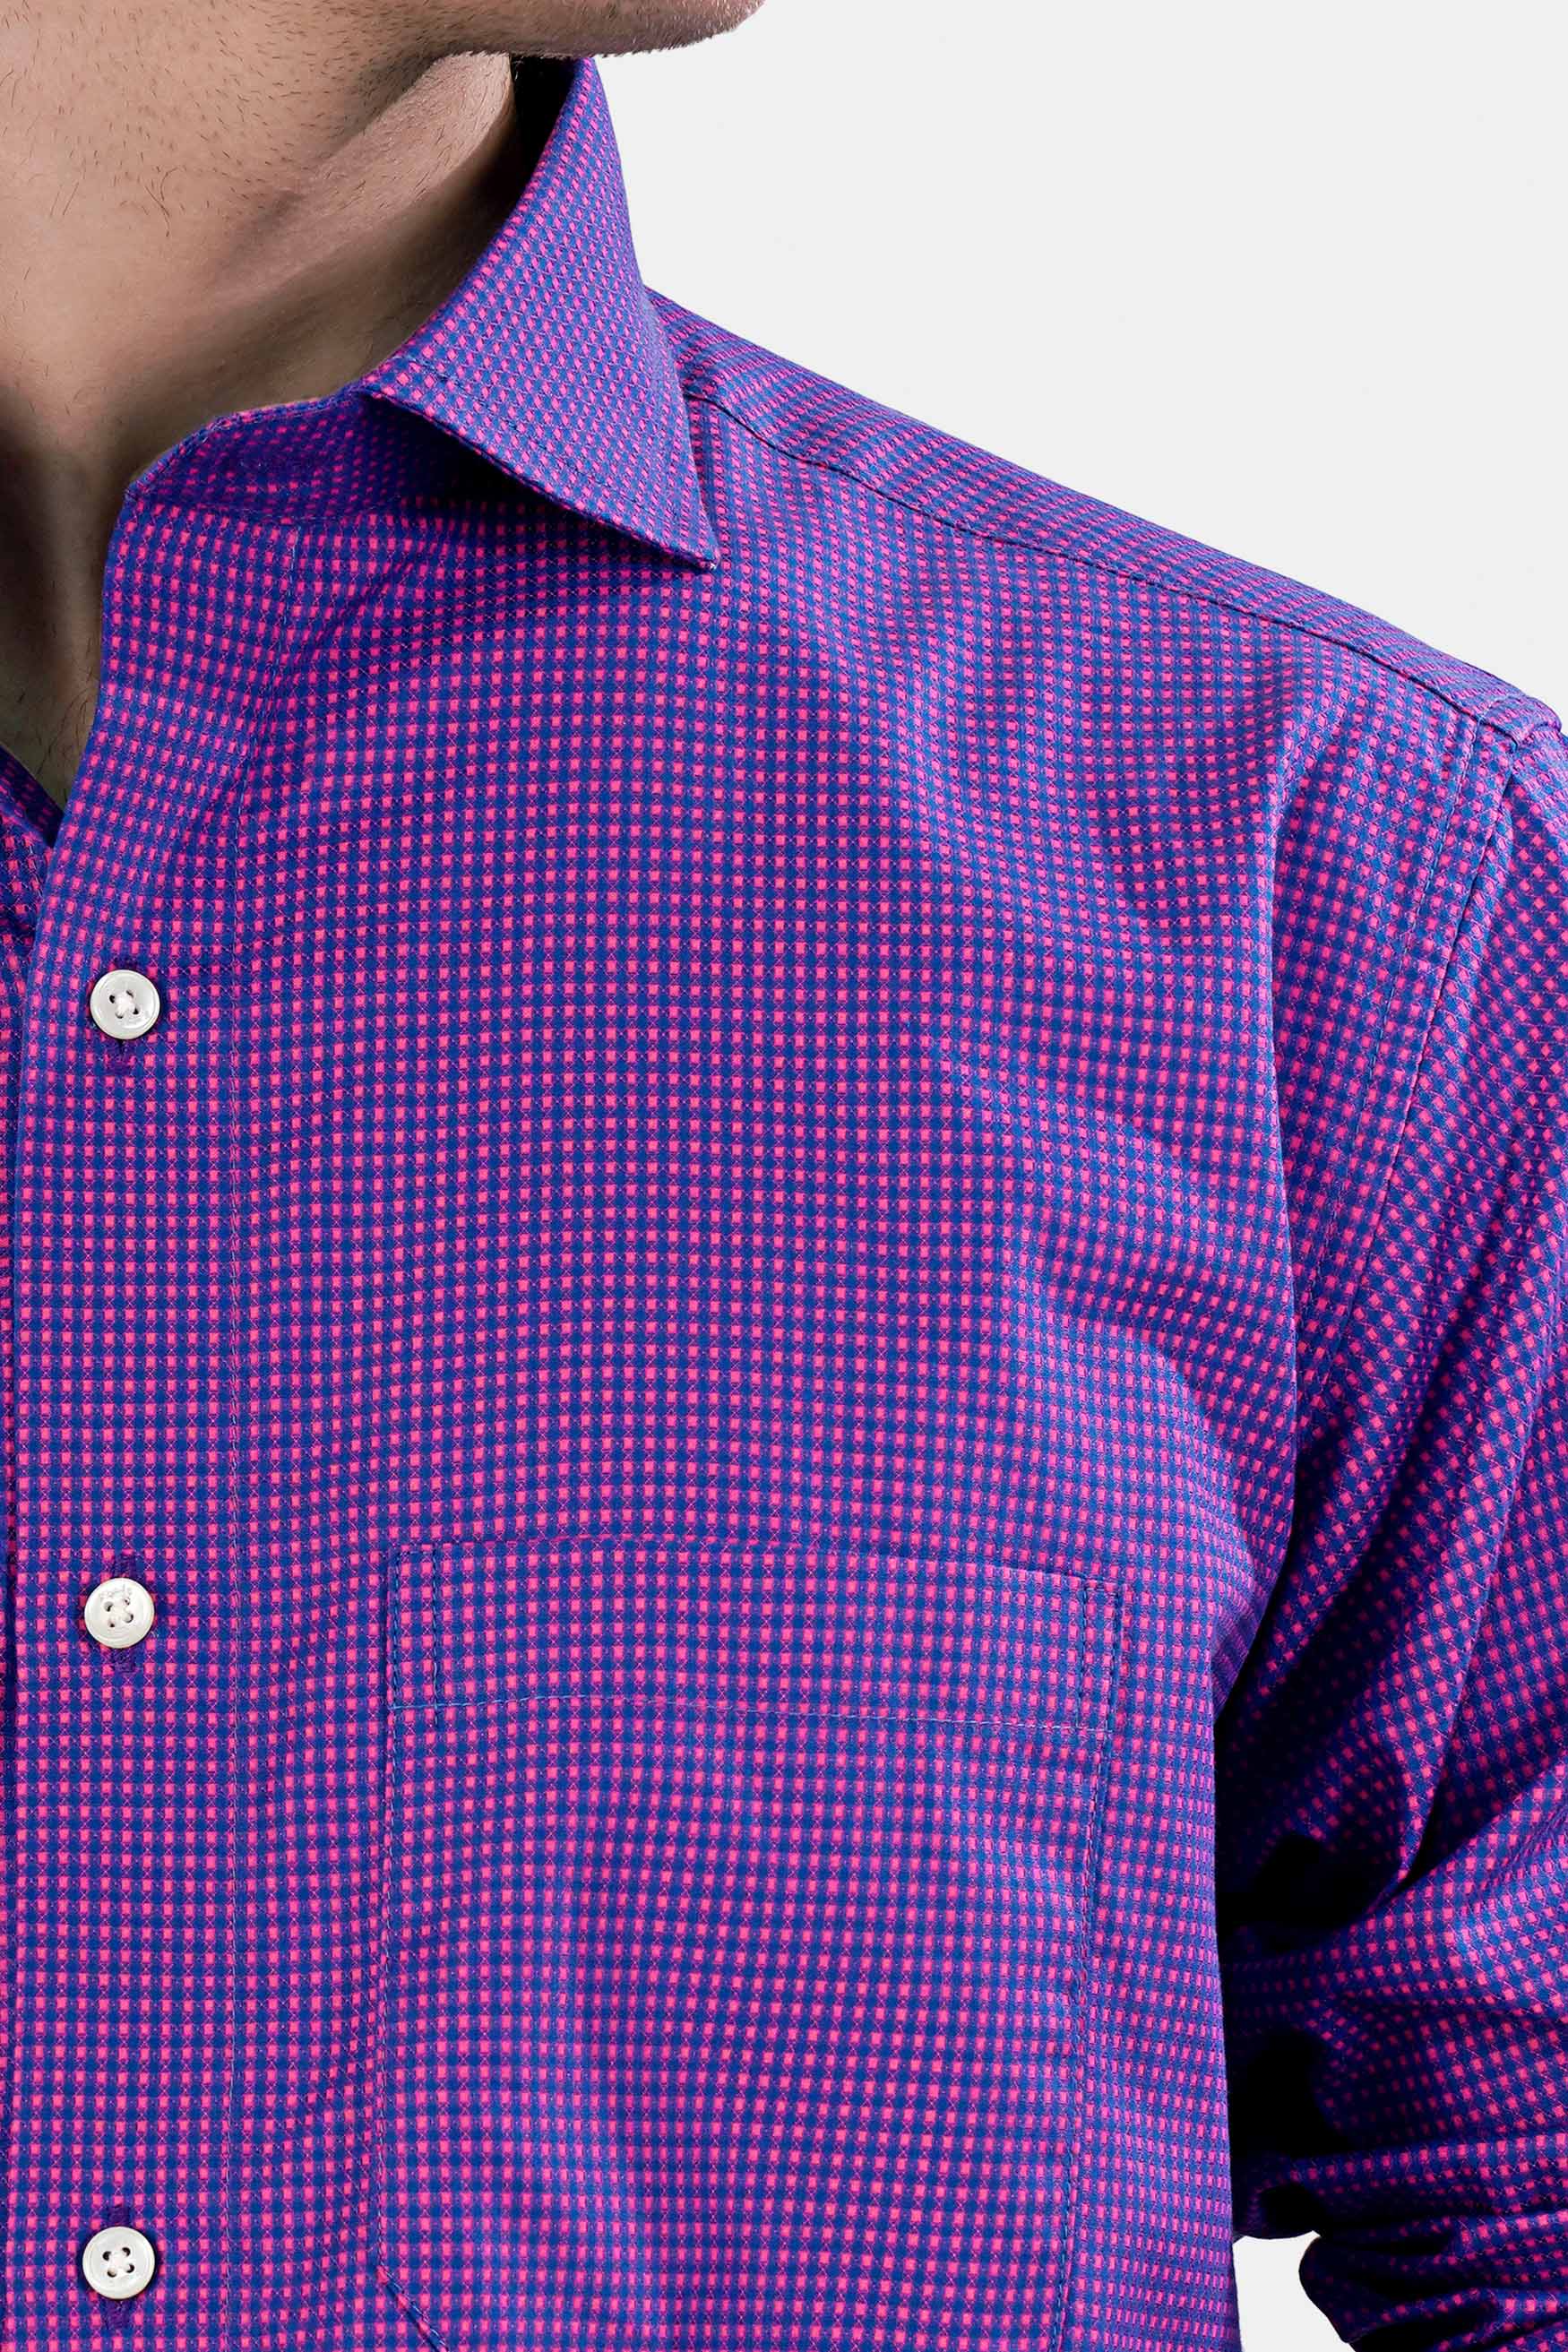 Catalina Blue and Cerise Pink Gingham Checkered Jacquard Textured Premium Giza Cotton Shirt